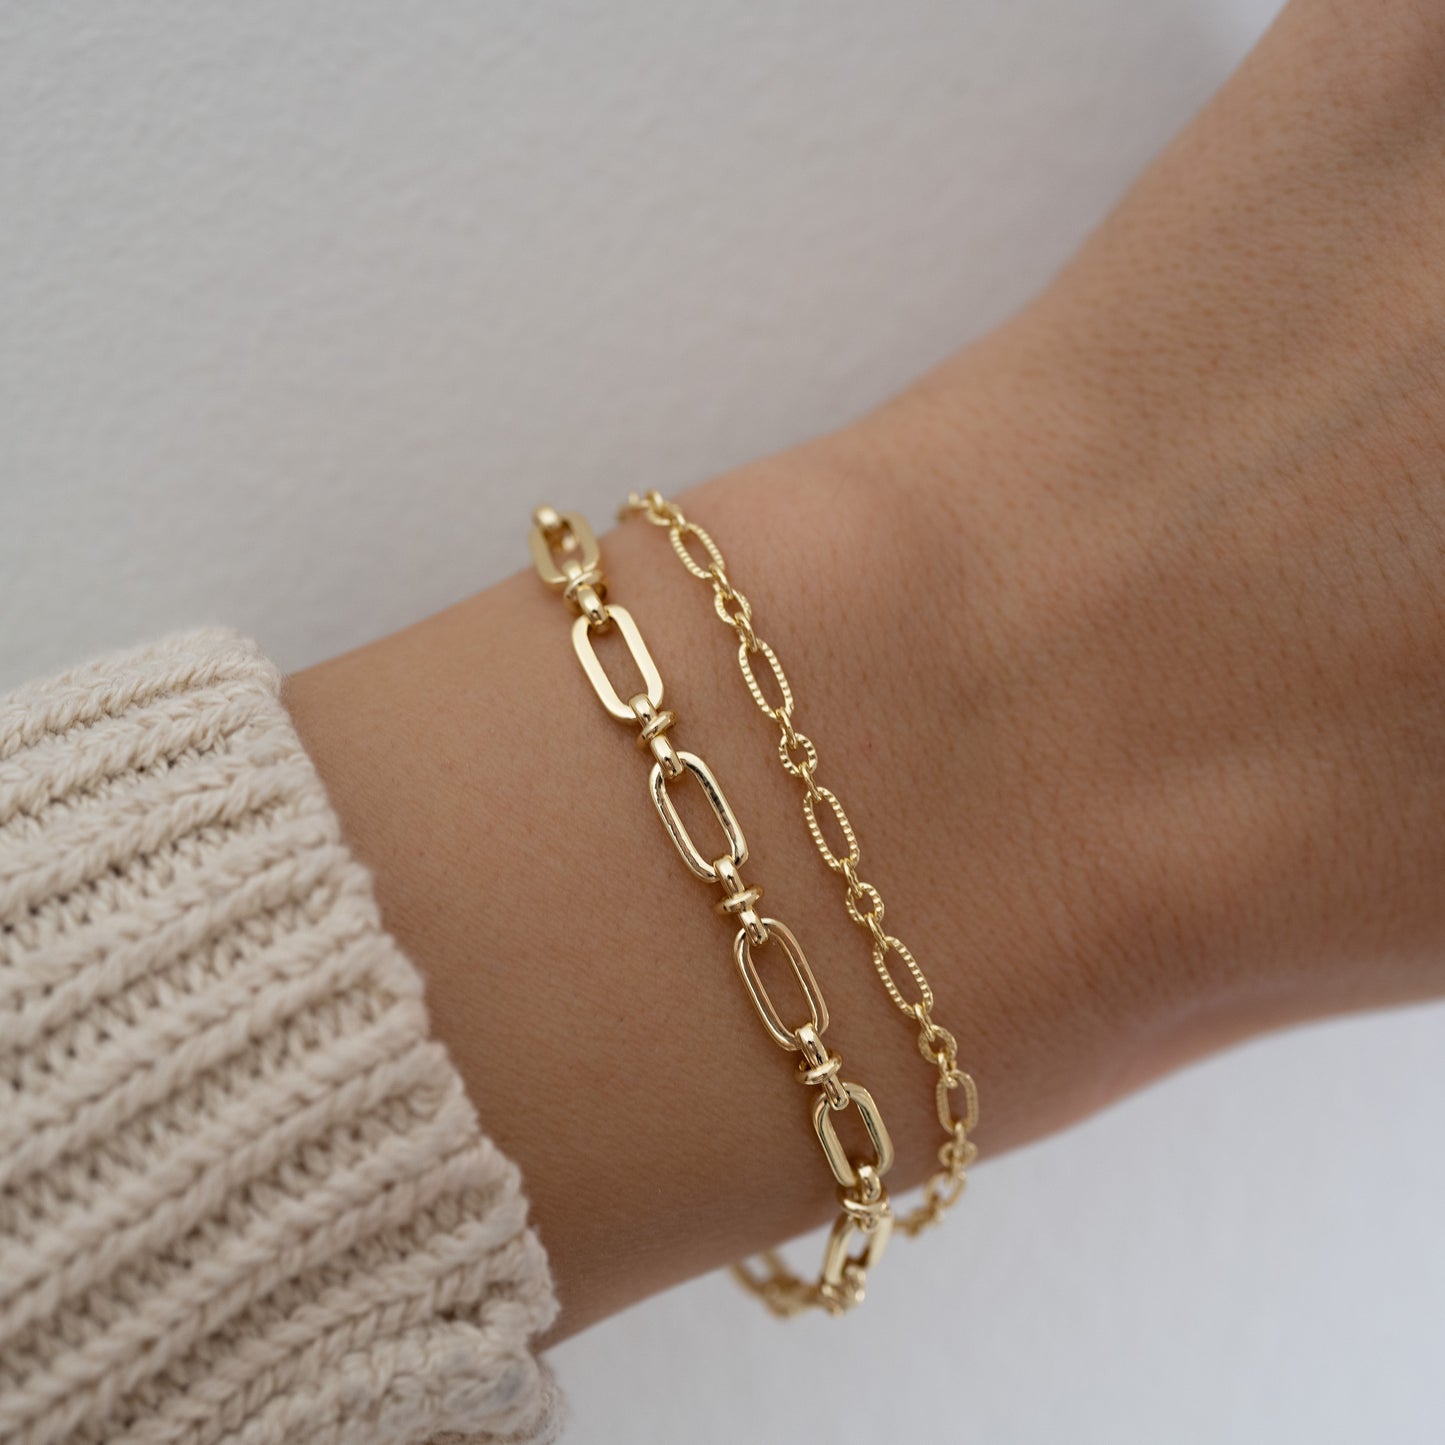 Textured Dainty Chain Bracelet